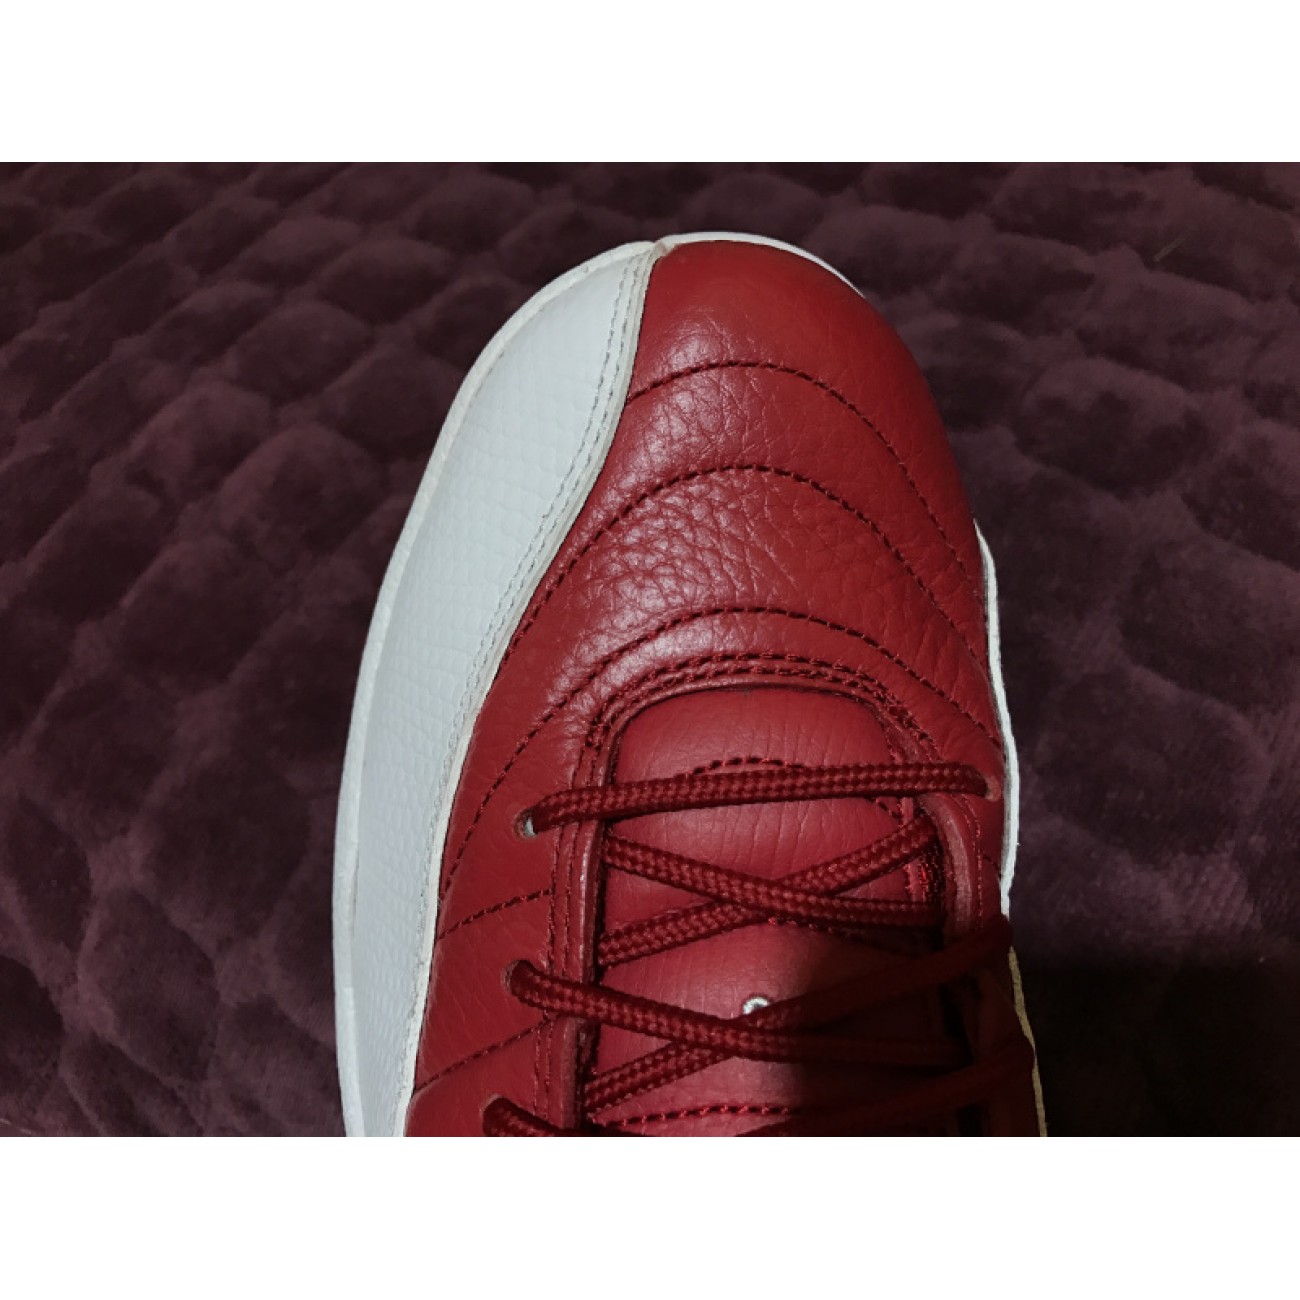 Air Jordan 12 "Gym Red" 130690-600